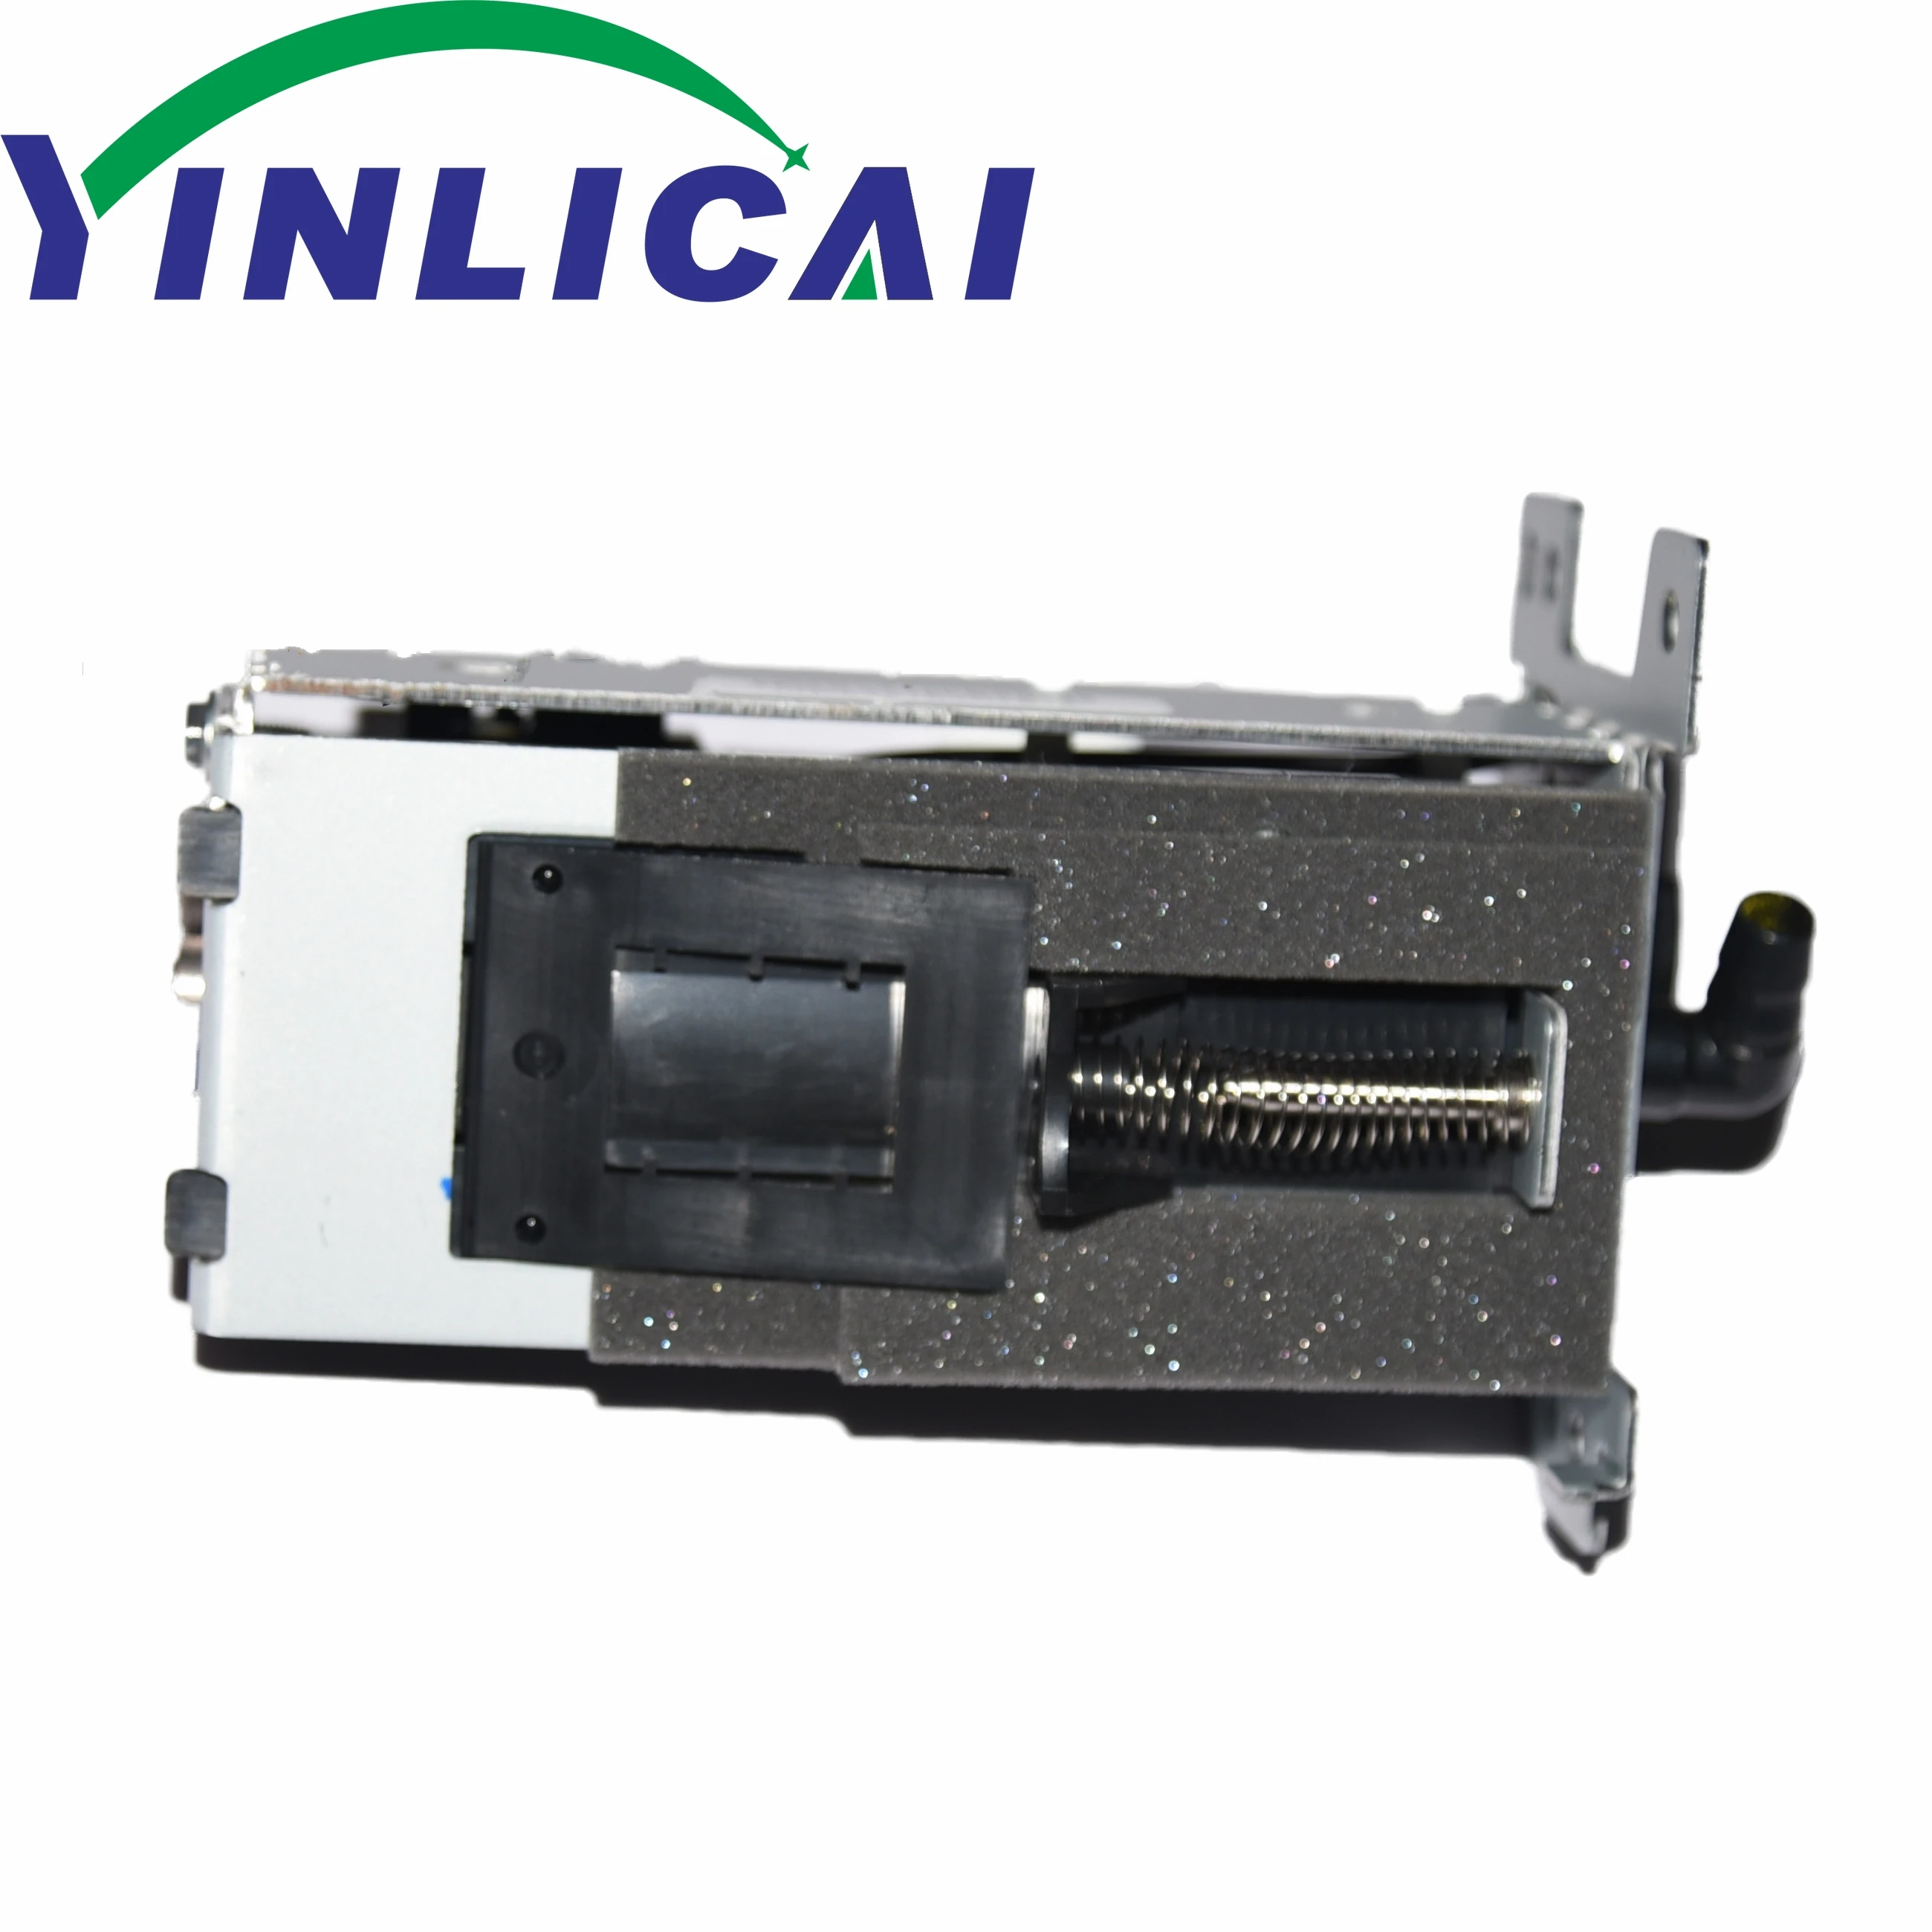 

1PC Genuine D059-3261 D059-3260 for Ricoh Aficio MP 1100 1350 9000 Pro 1107 1357 907 MP1100 MP1350 MP9000 Toner Pump Unit